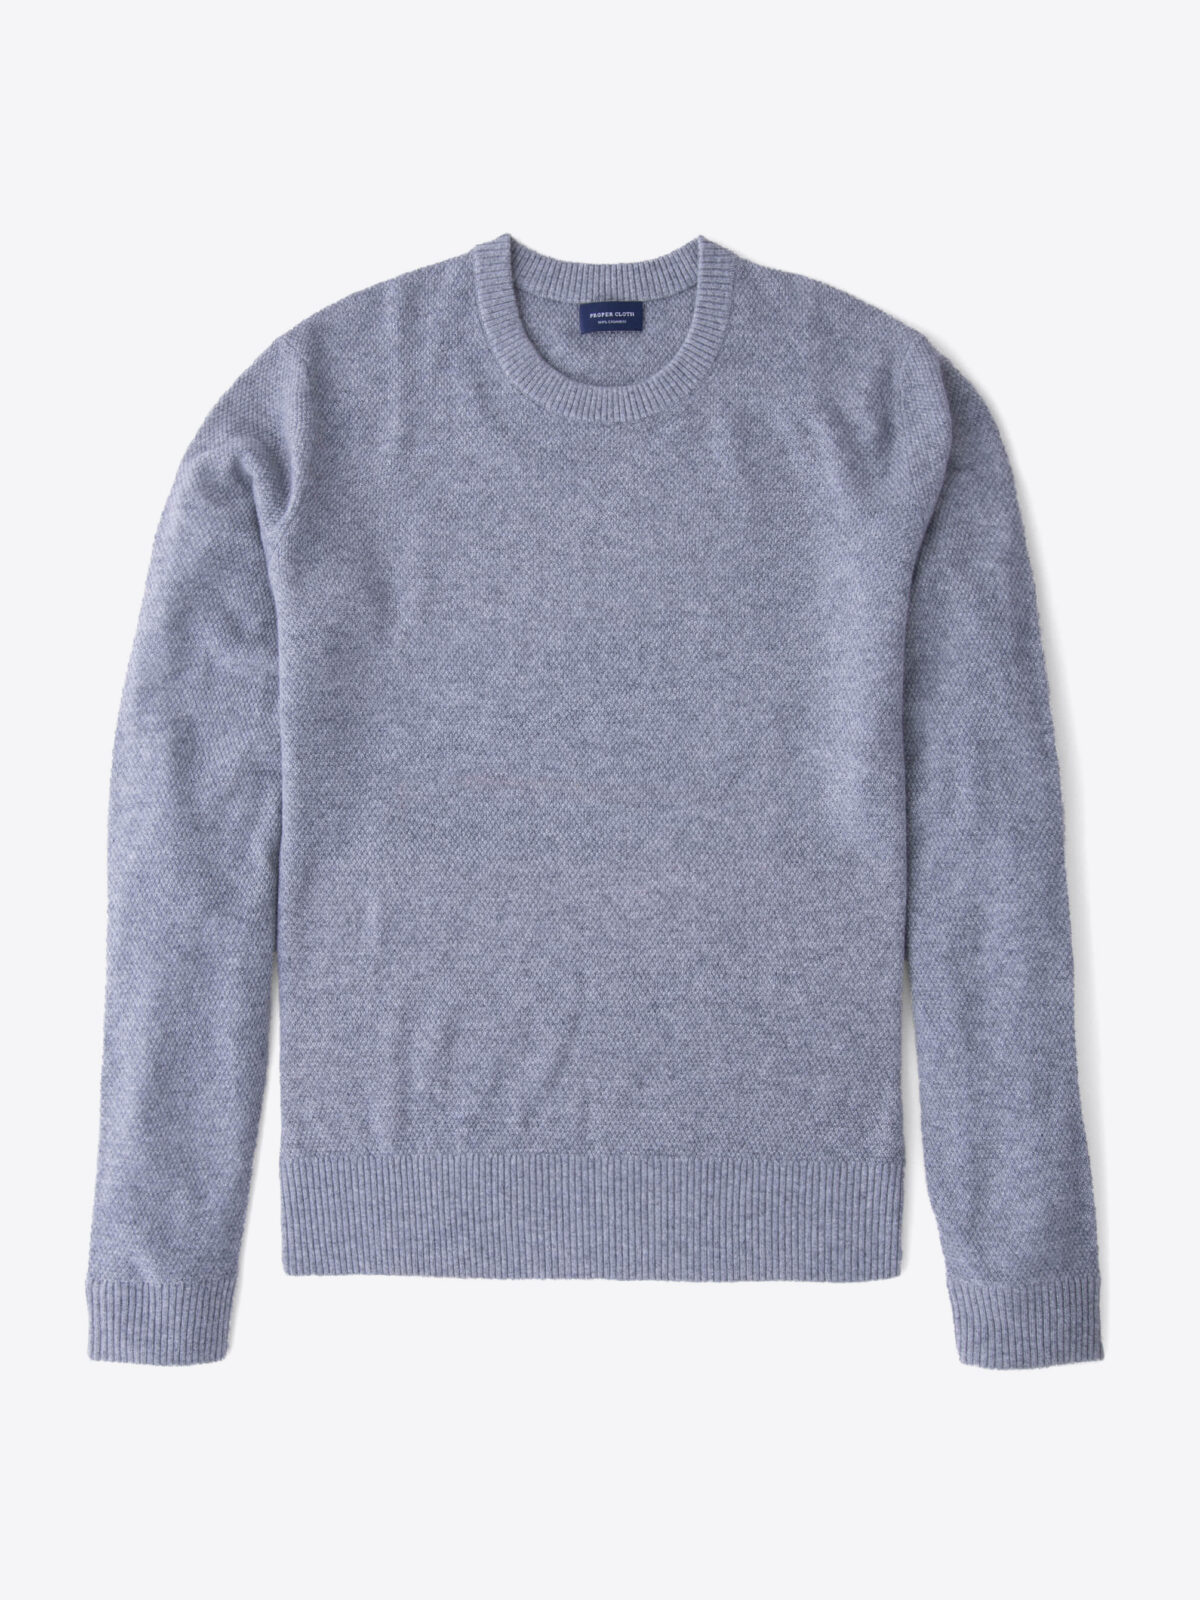 Light Grey Cobble Stitch Cashmere Crewneck Sweater